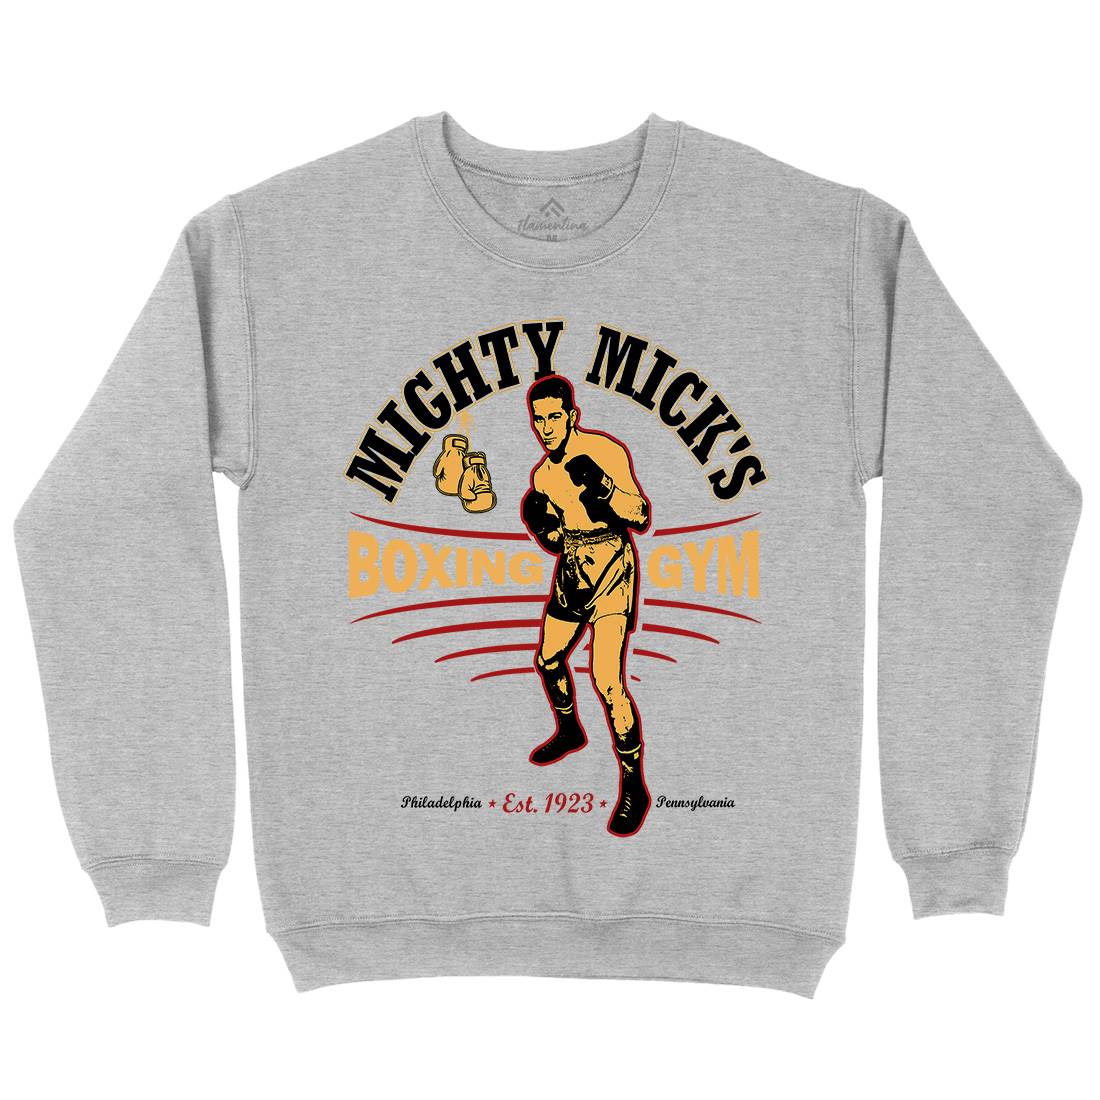 Mighty Micks Gym Kids Crew Neck Sweatshirt Sport D276